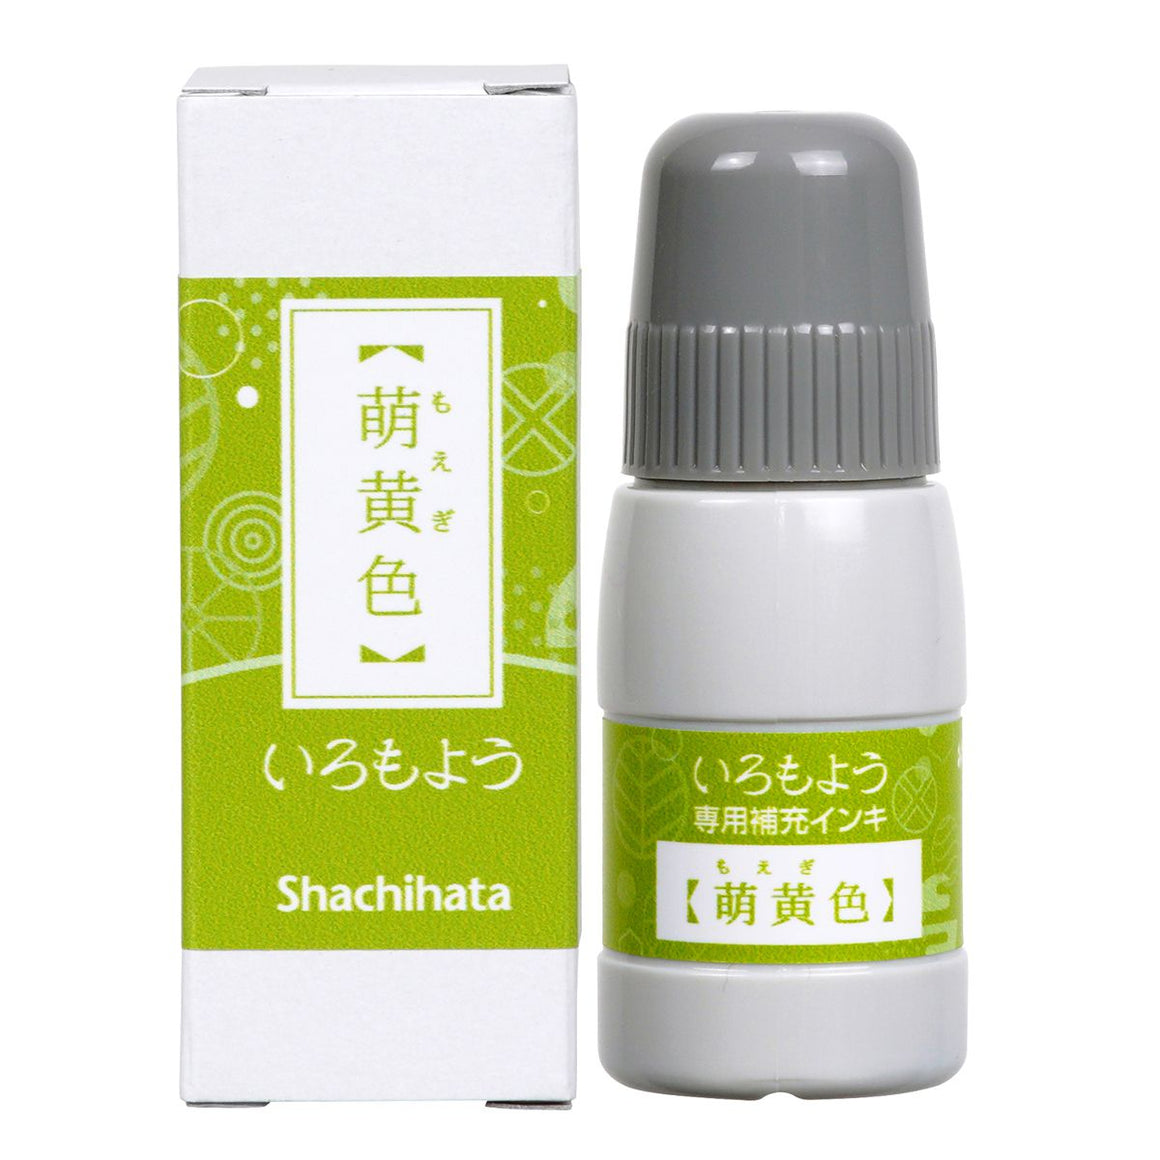 REFILL: Shachihata Iromoyo Ink Refill Bottle - Moegi-Iro 萌黄色 - SAC-20-YG